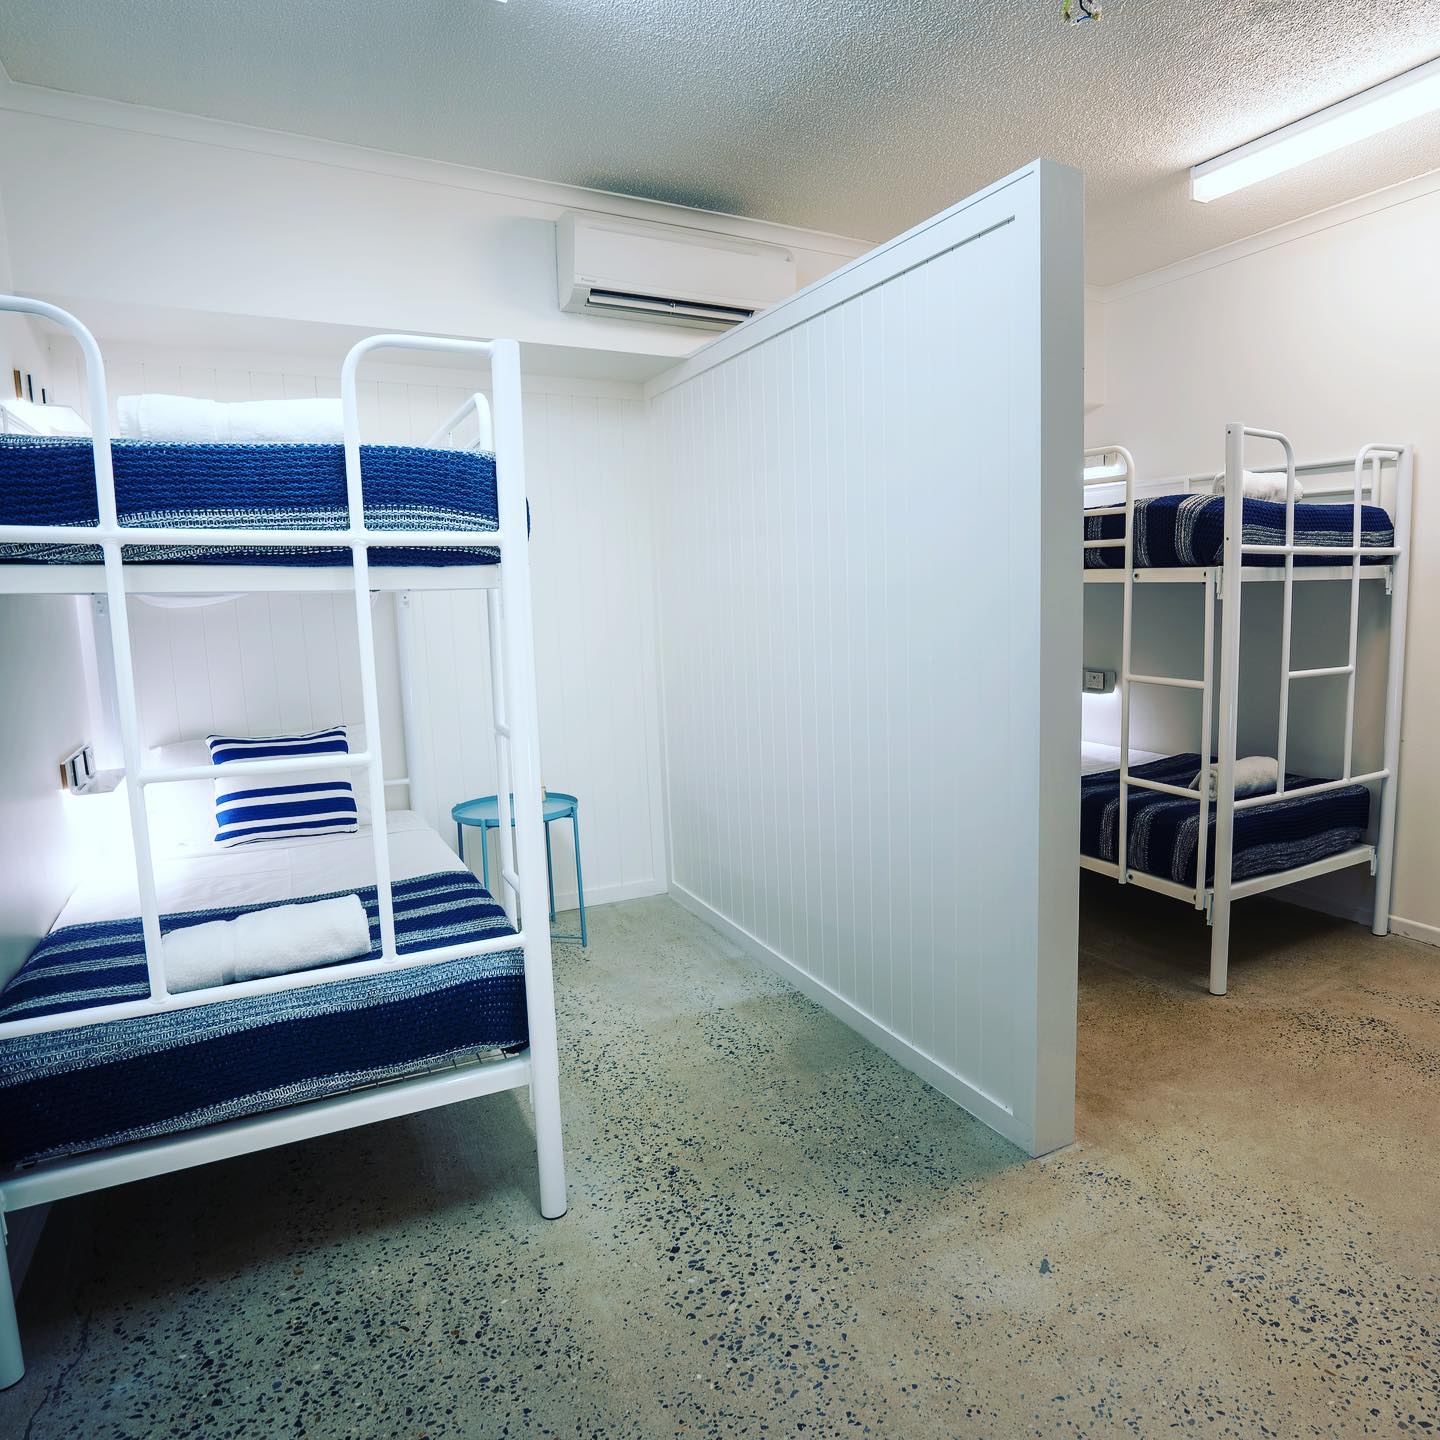 hostel commercial bunk bed